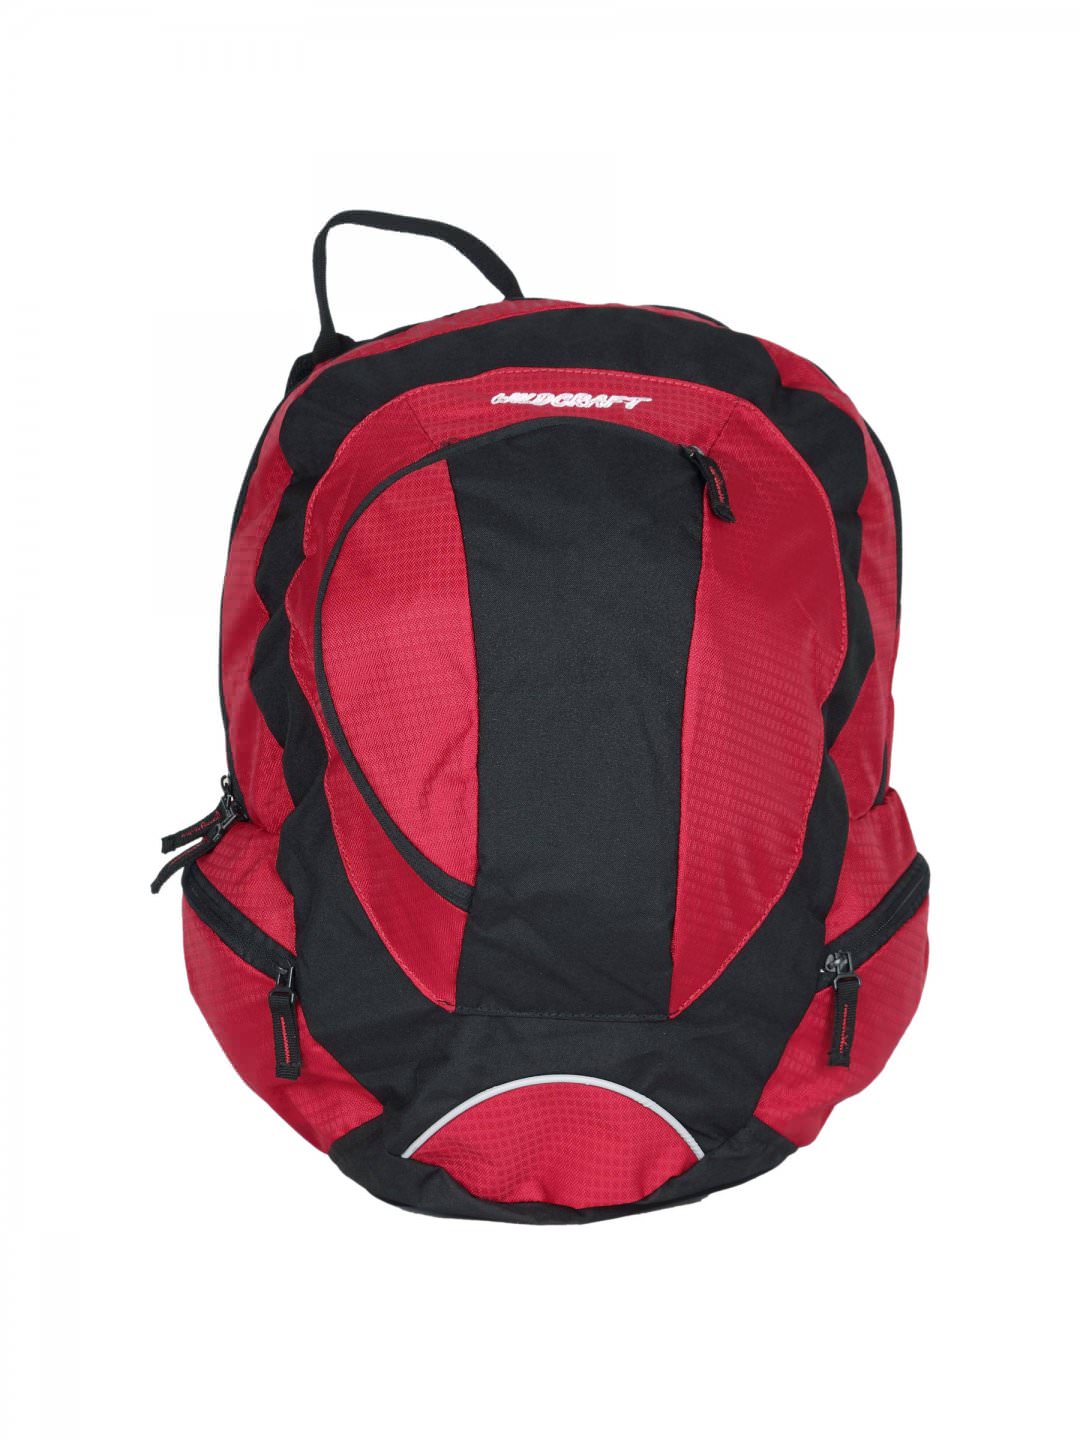 Wildcraft Unisex Halo Red Black Backpack